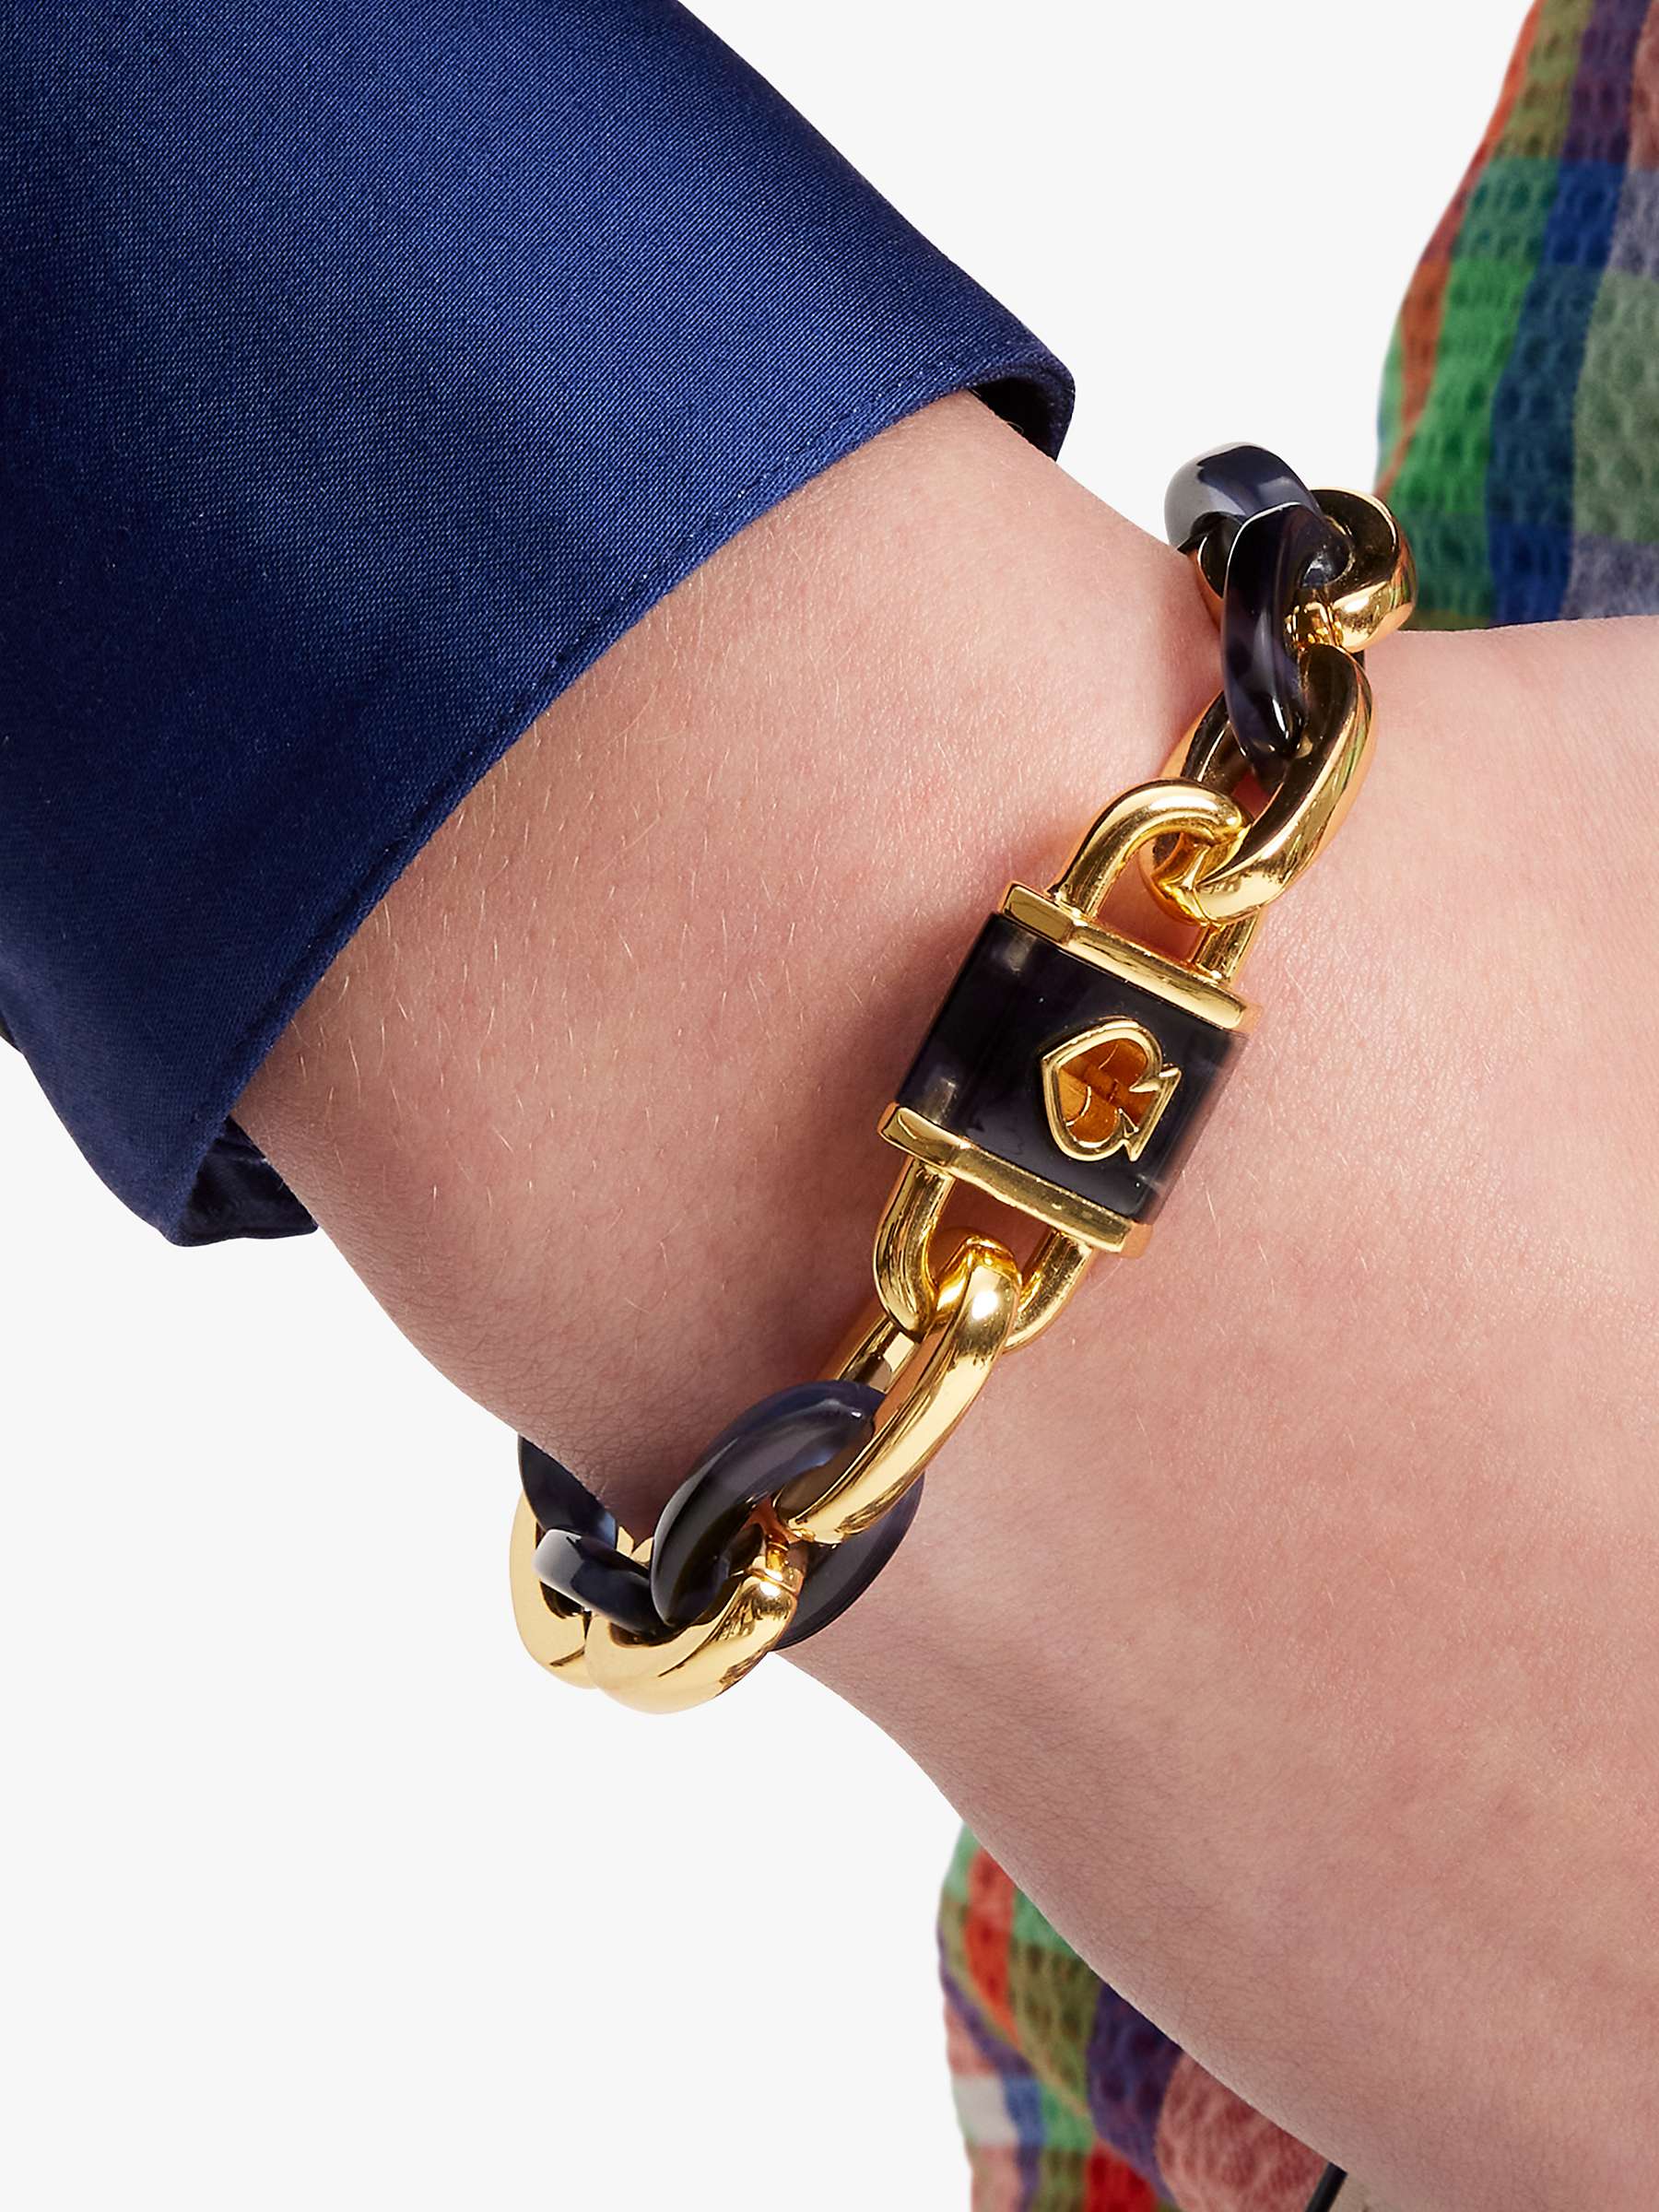 Buy kate spade new york Lock Charm Link Chain Bracelet, Gold/Navy Online at johnlewis.com